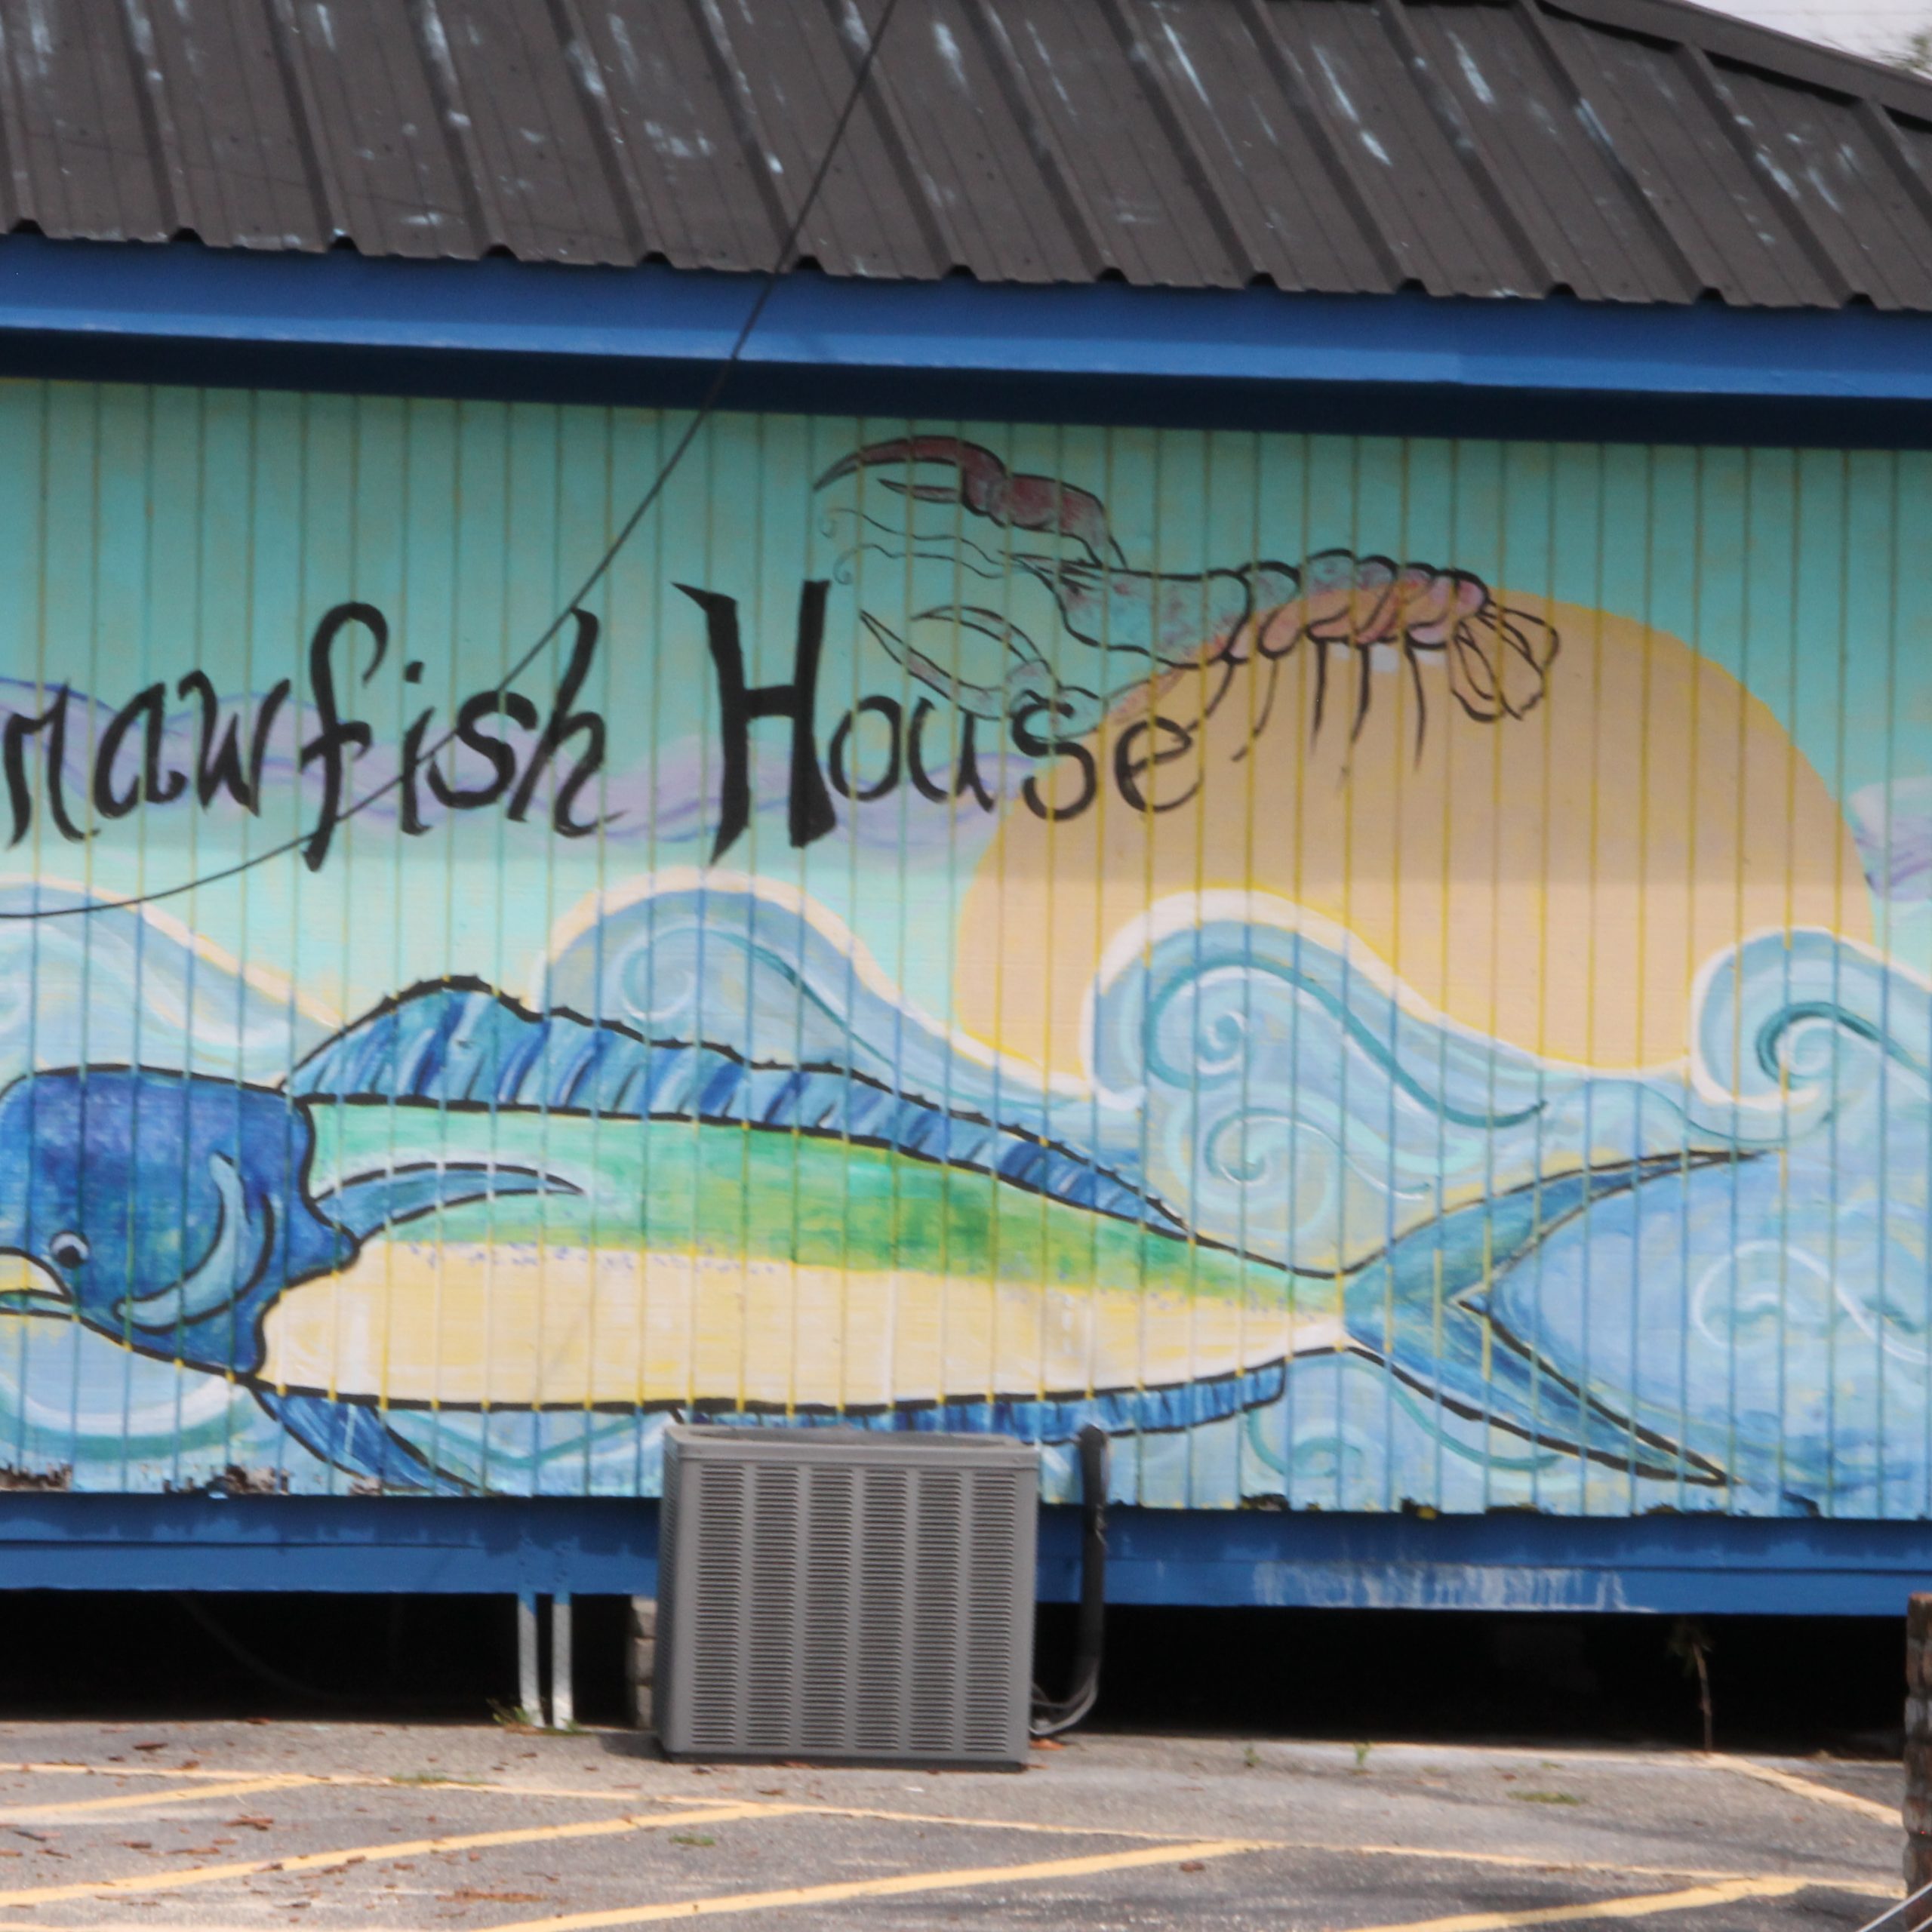 The Crawfish house restaurant in downtown Ocean Springs, MS